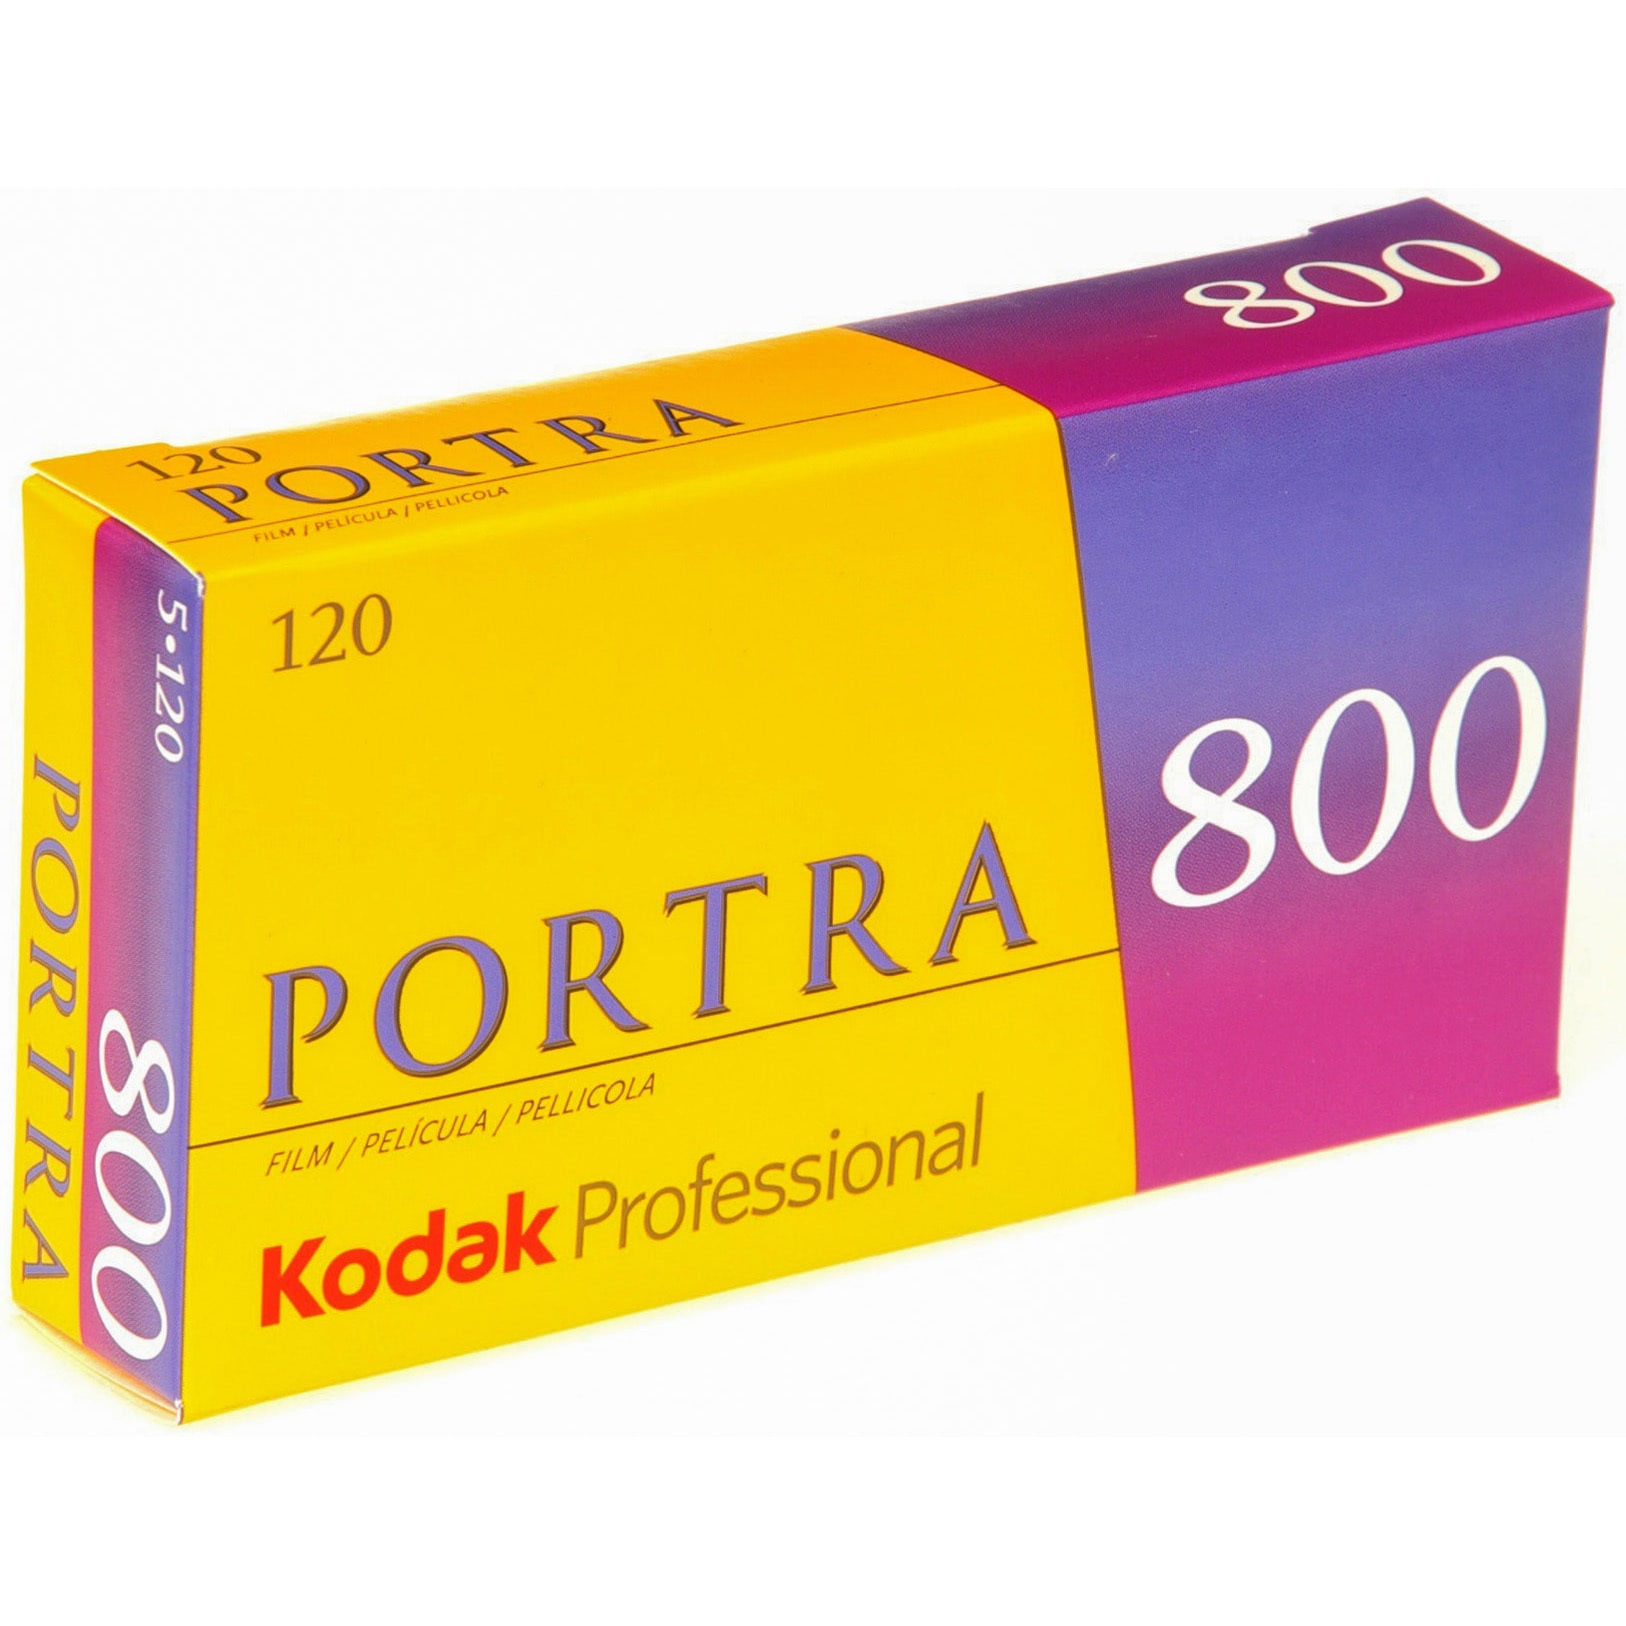 PORTRA800 120-5p KODAK PROFESSIONAL カラーネガフィルム 1箱 